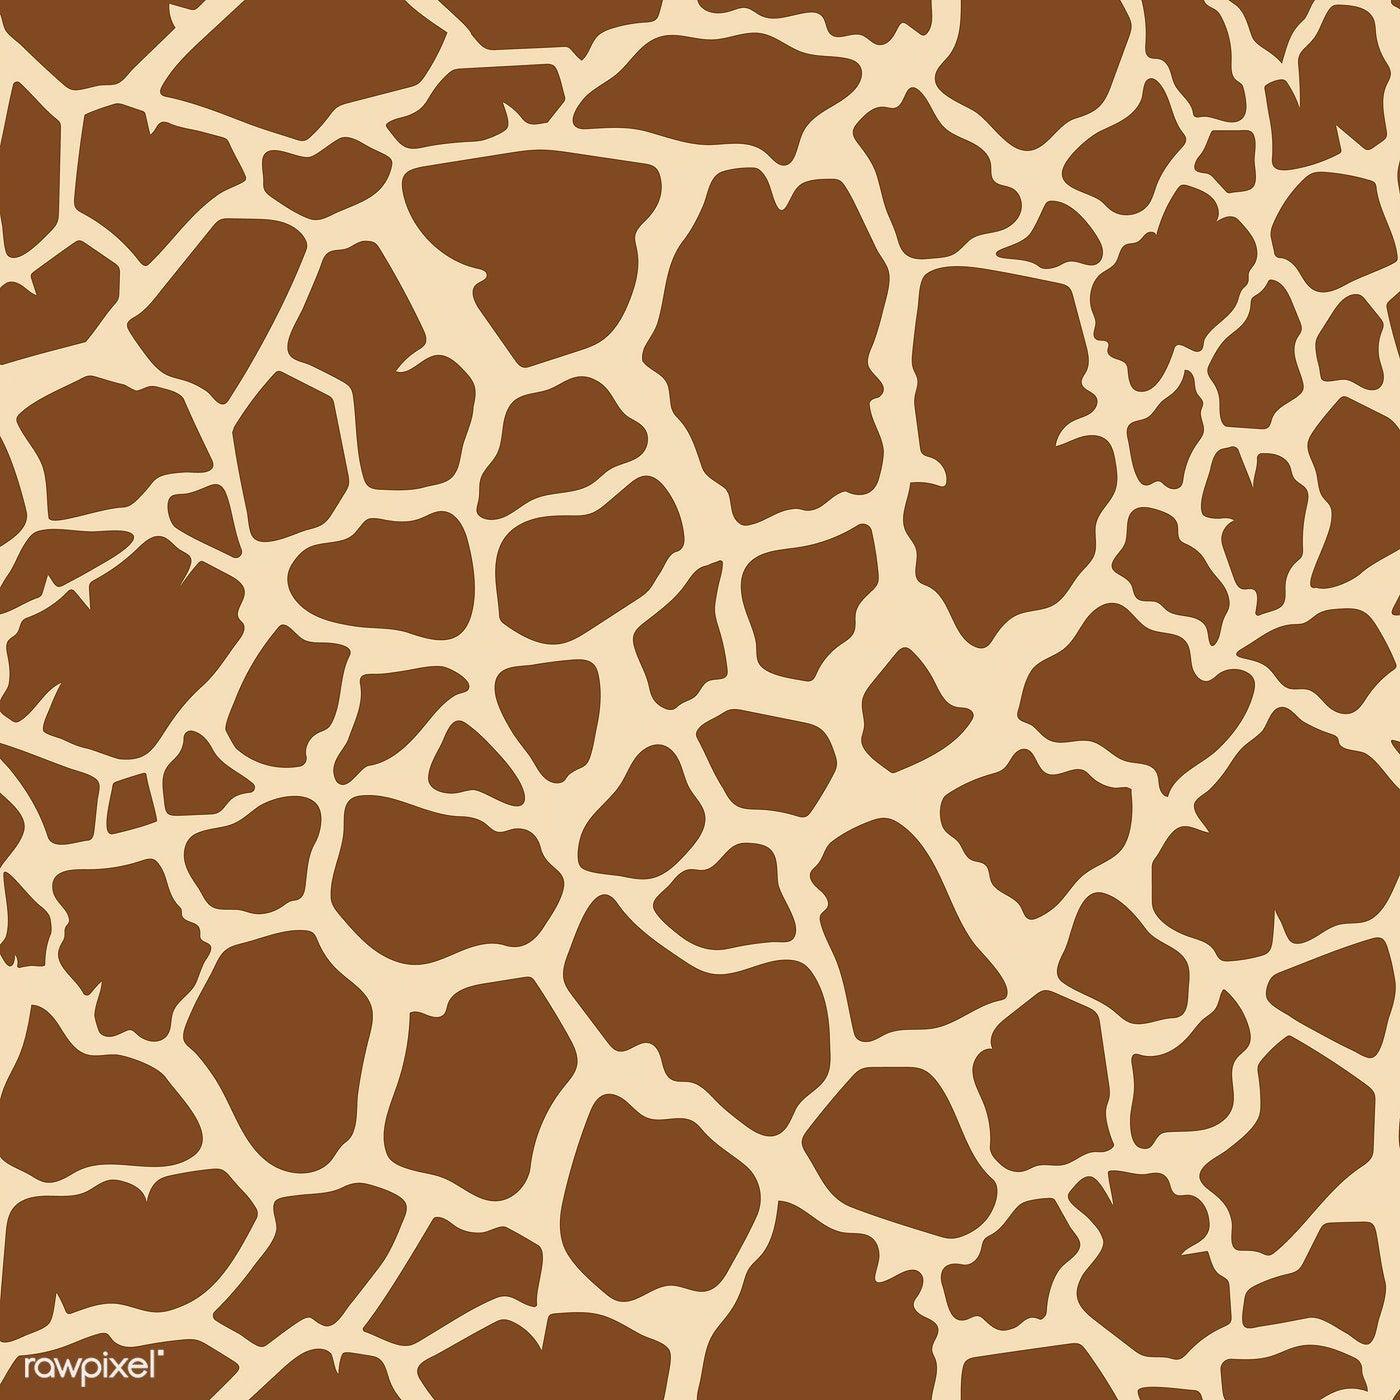 Giraffe Wallpaper Vector Images over 6300